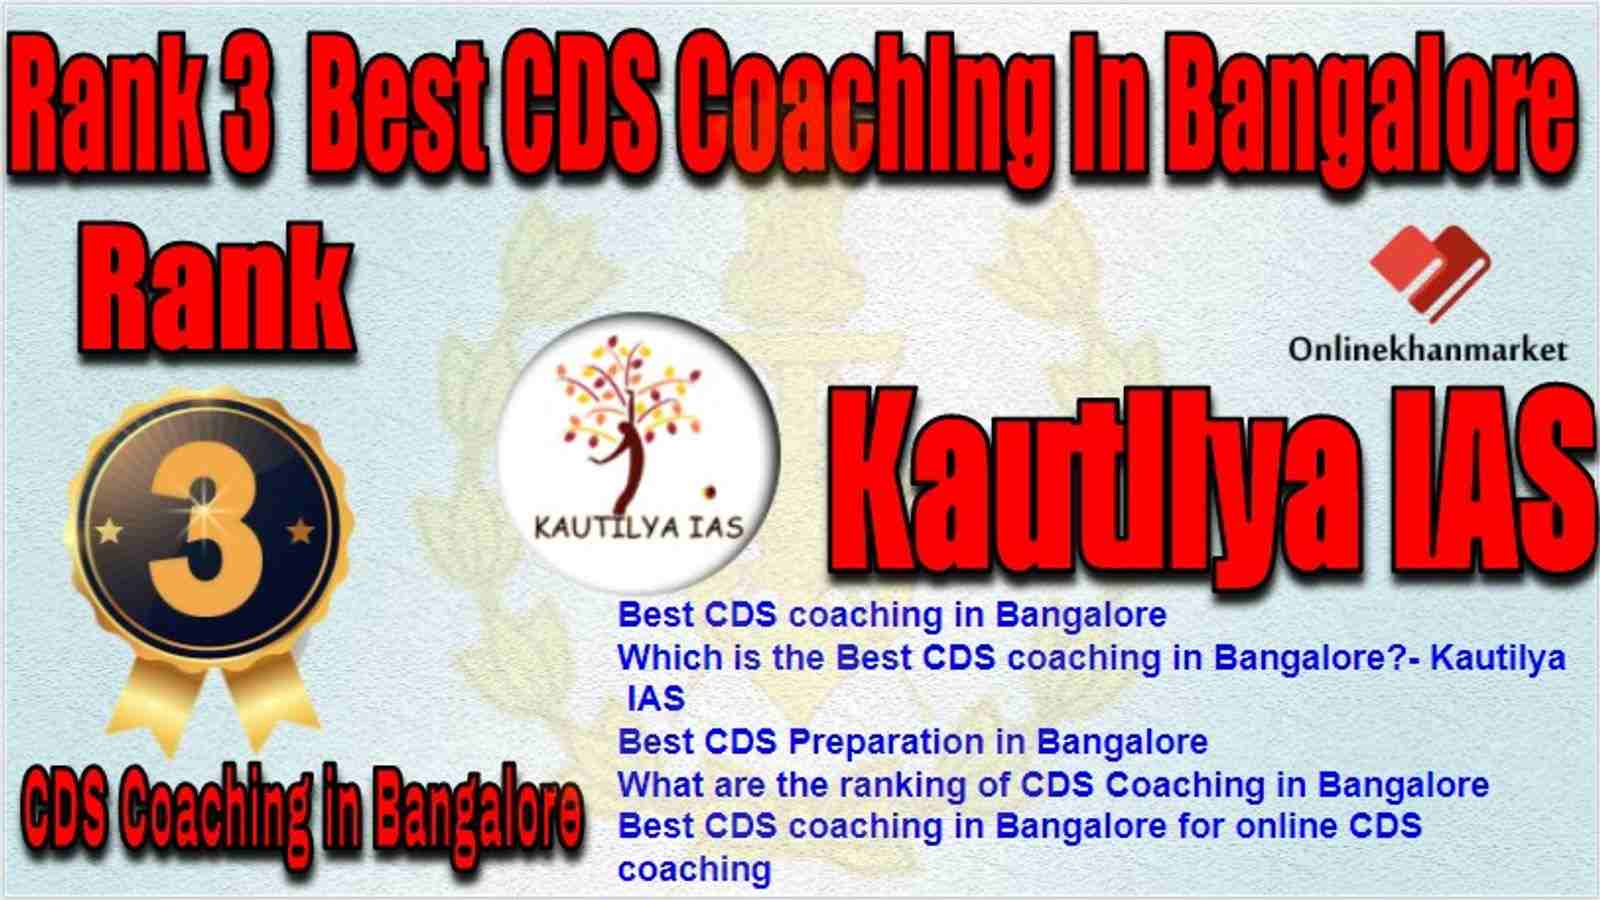 Rank 3 Best CDS Coaching in bangalore